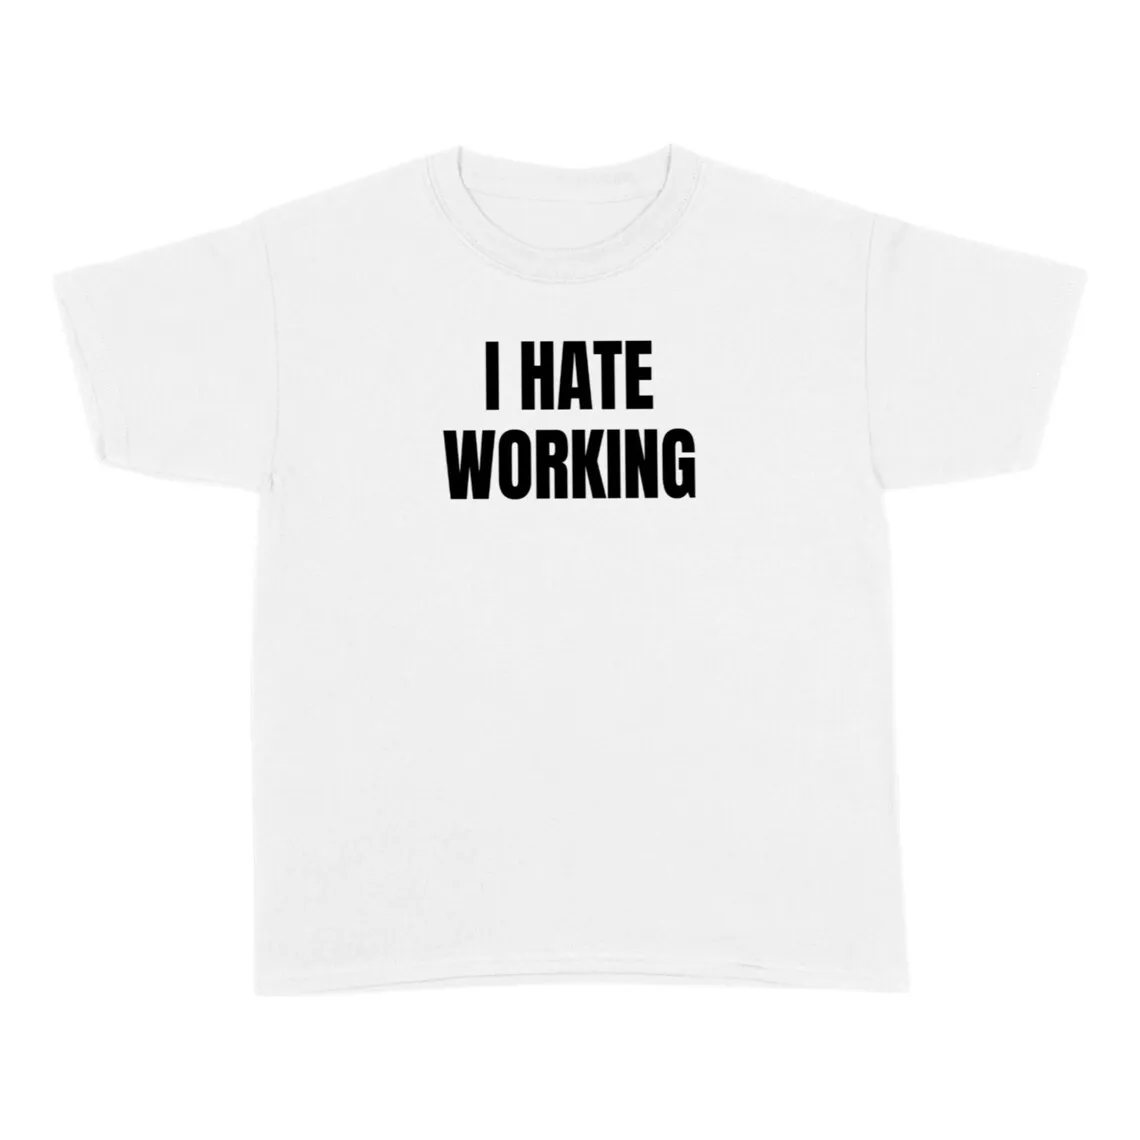 

Skuggnas I Hate Working Aesthetic Shirt 90s Slogan Tee Short Sleeved Fashion Tumblr t shirt Cotton tshirts Unisex Casual Tops